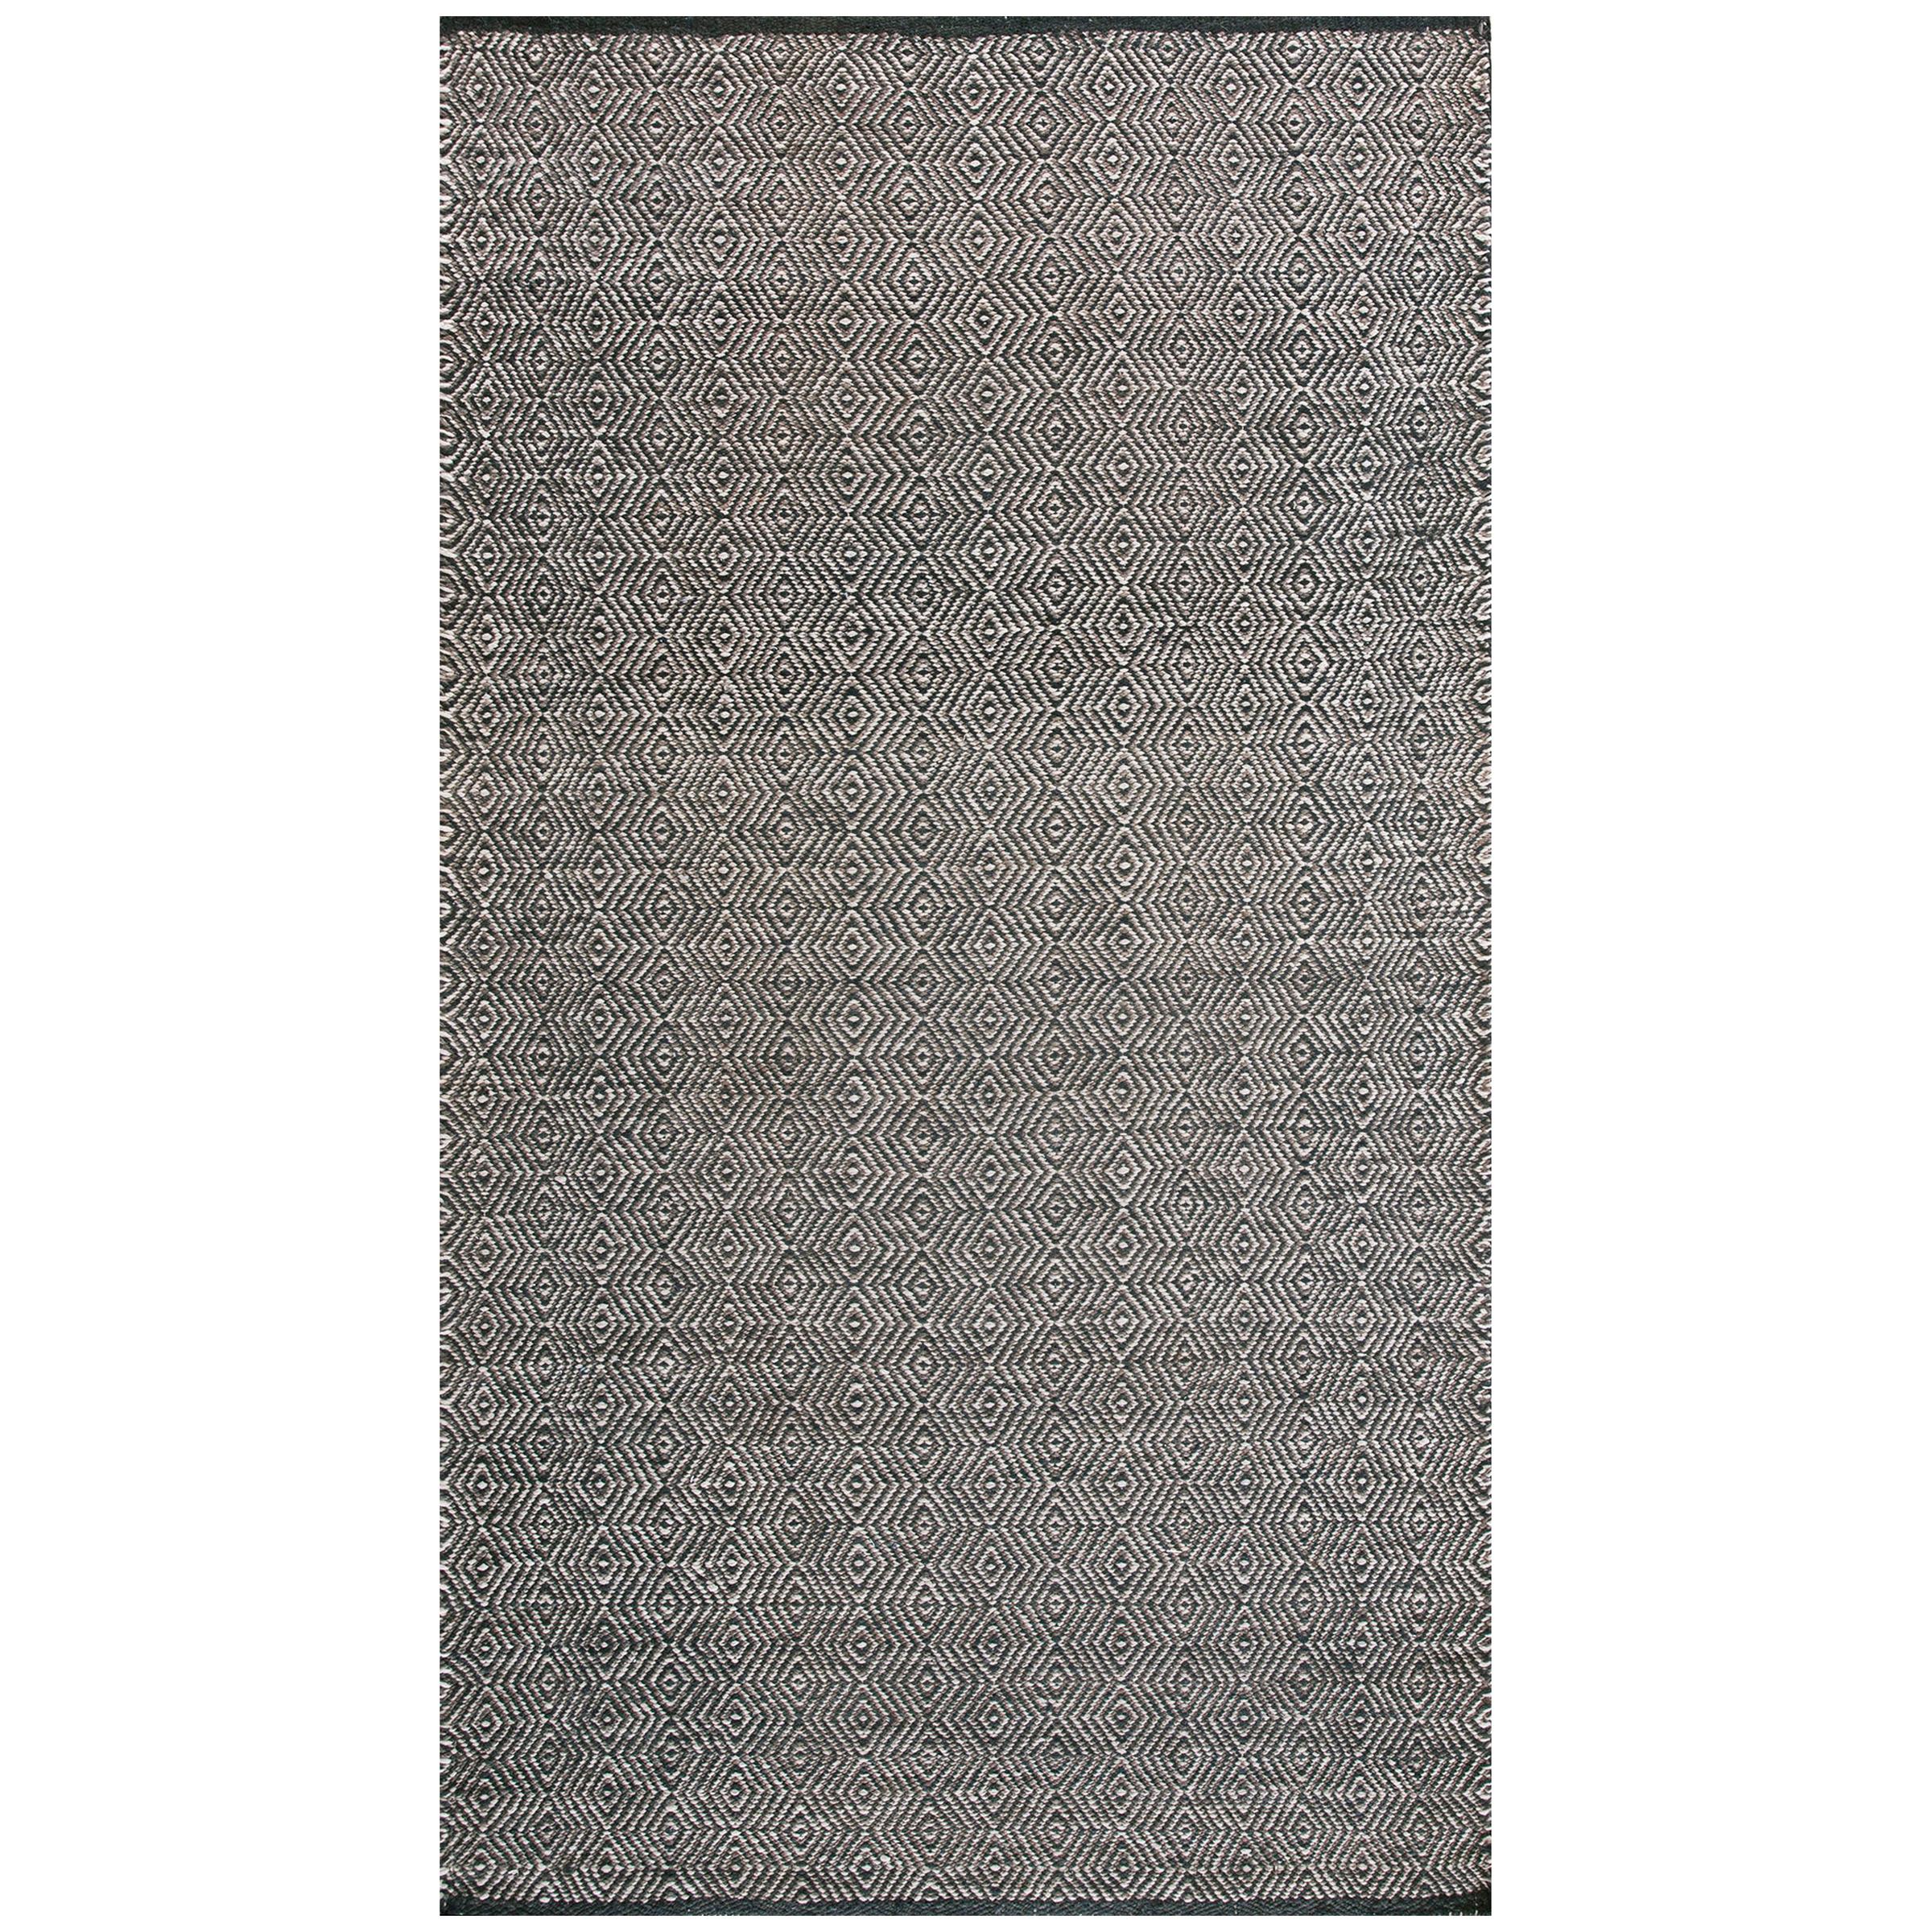 1940s American Navajo Twill Saddle Blanket Carpet ( 3' x 5'6" - 92 x 167 cm ) For Sale